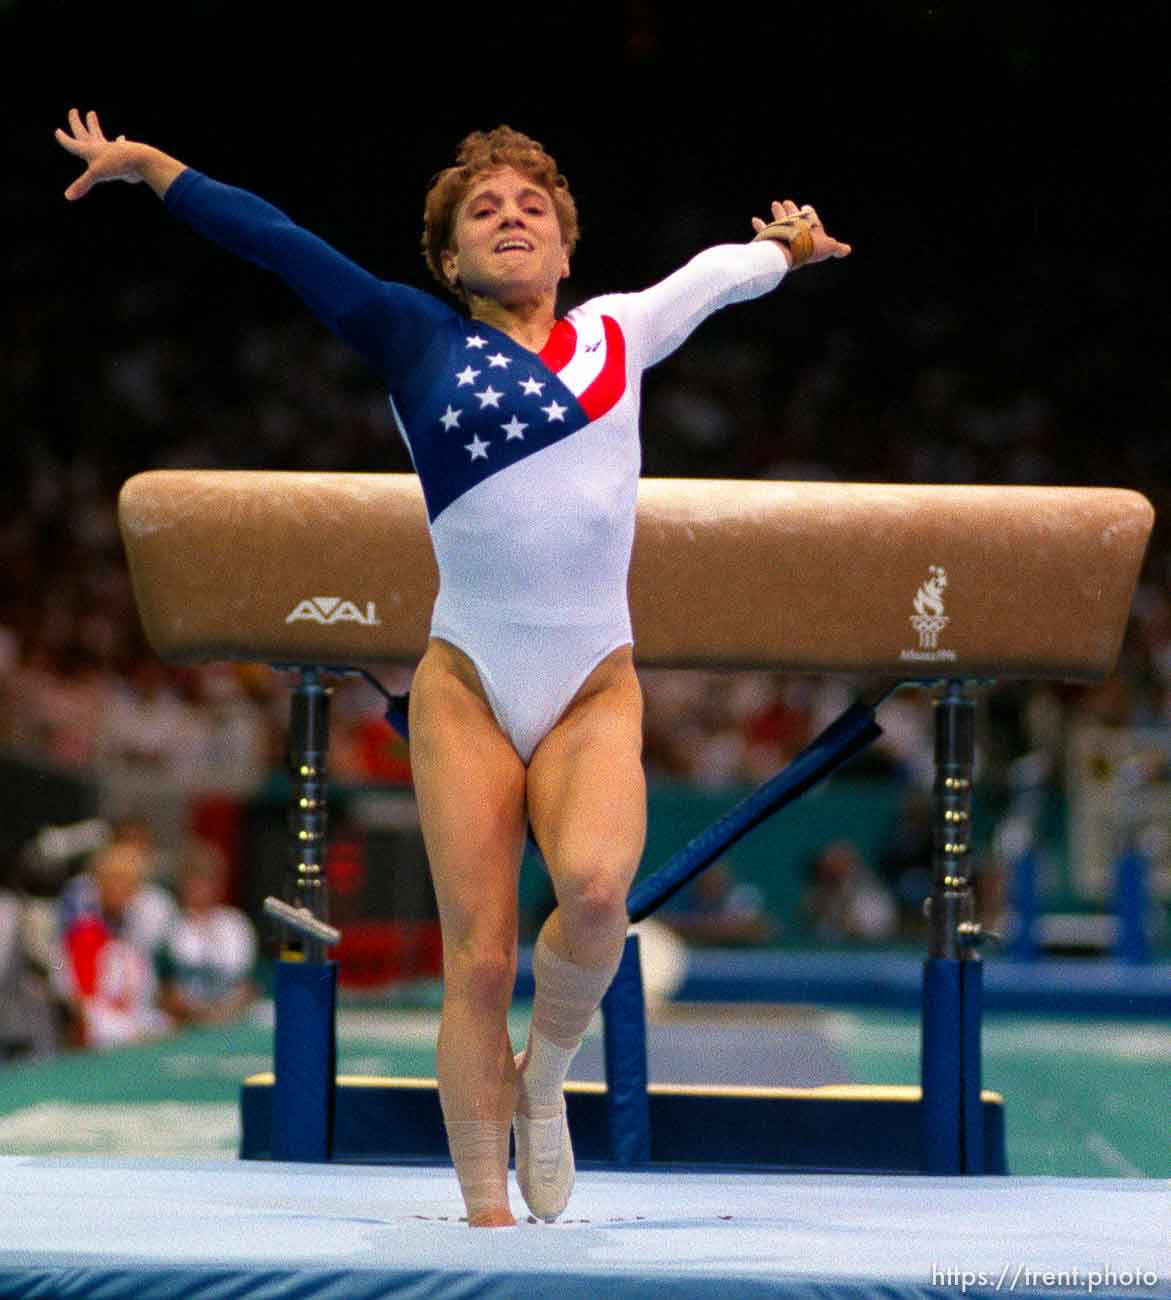 Women’s Gymnastics – USA Gold